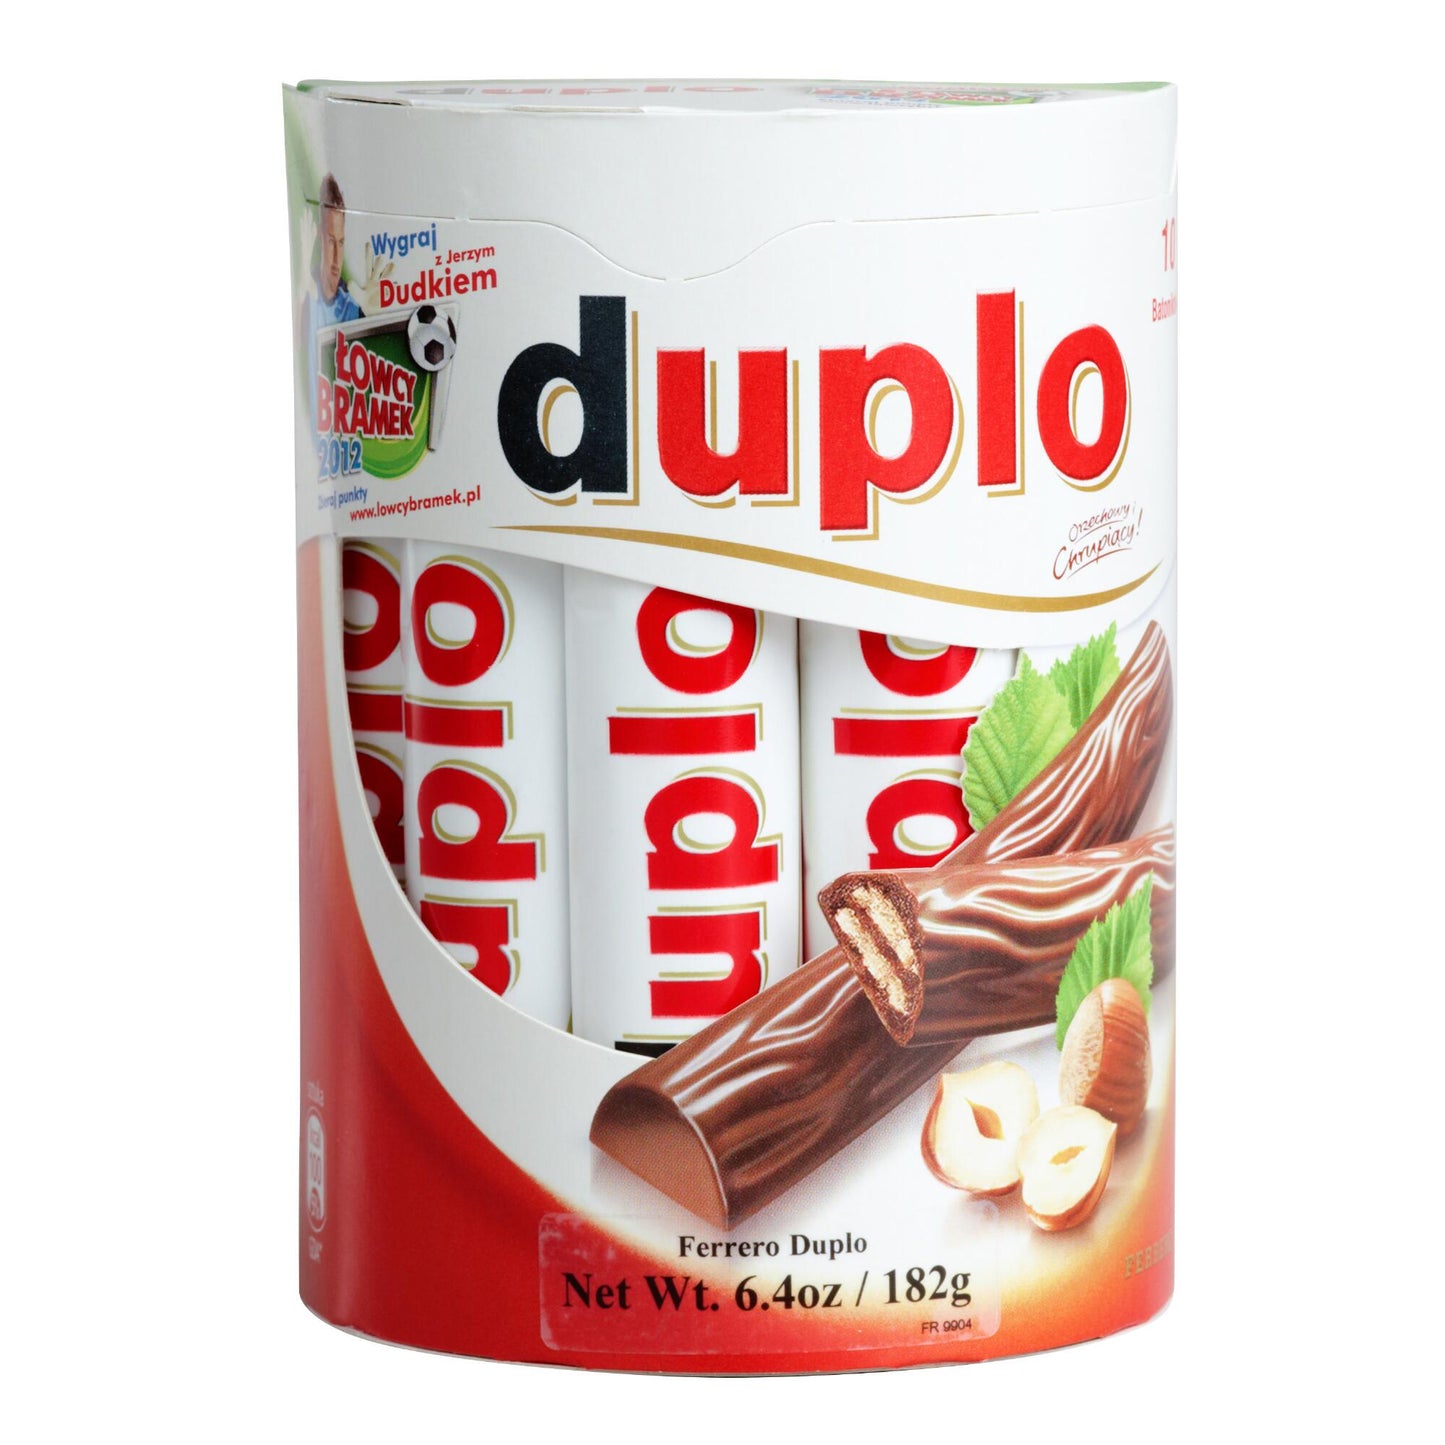 Duplo – Pack Bars, Candy German Shop Ferrero LLC 10